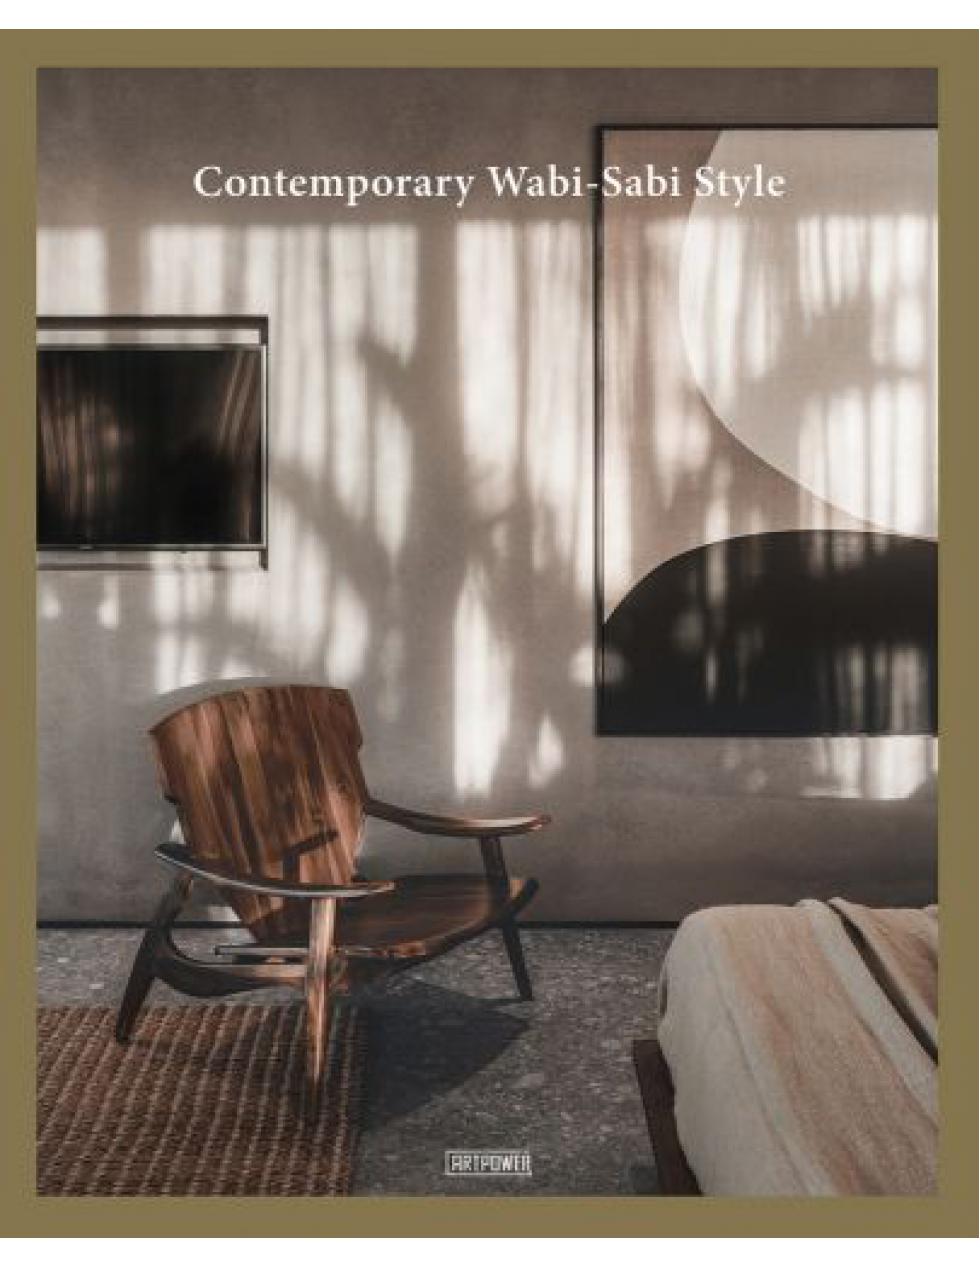 Book : CONTEMPORARY WABI-SABI STYLE